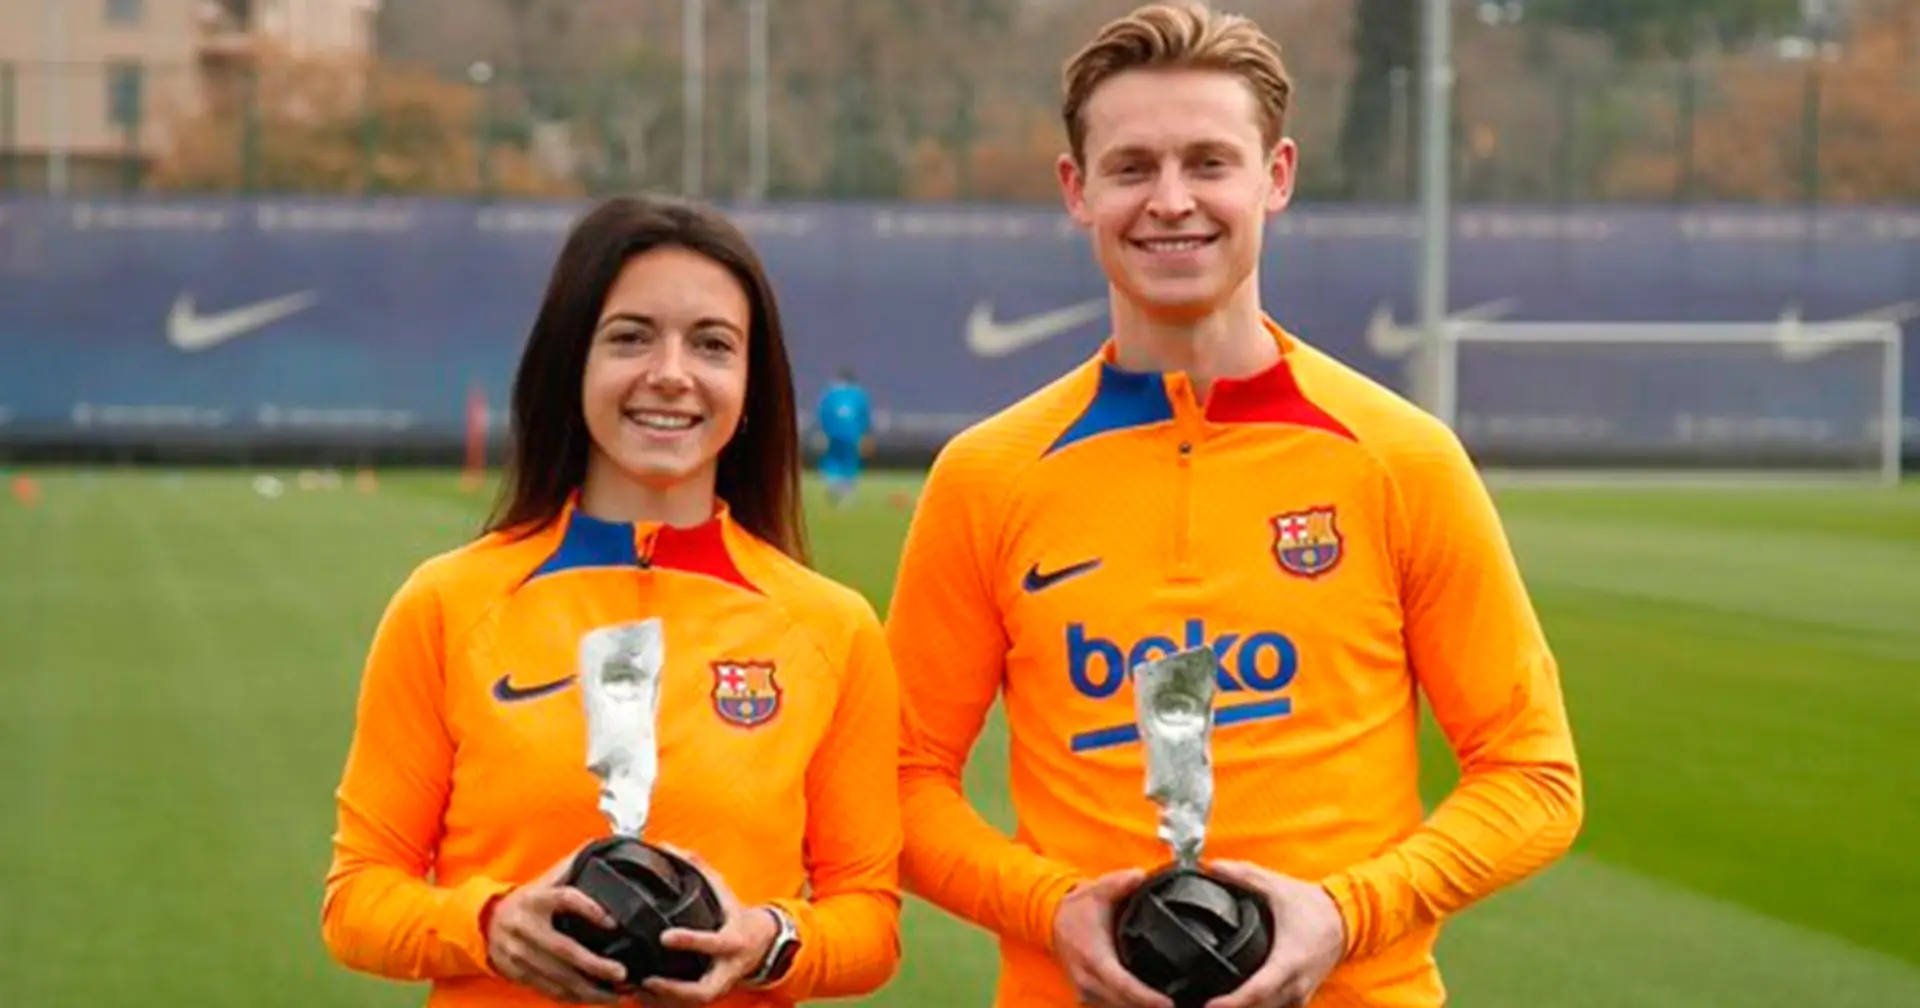 Frenkie de Jong remporte le Barca Players Award: ce que cela explique